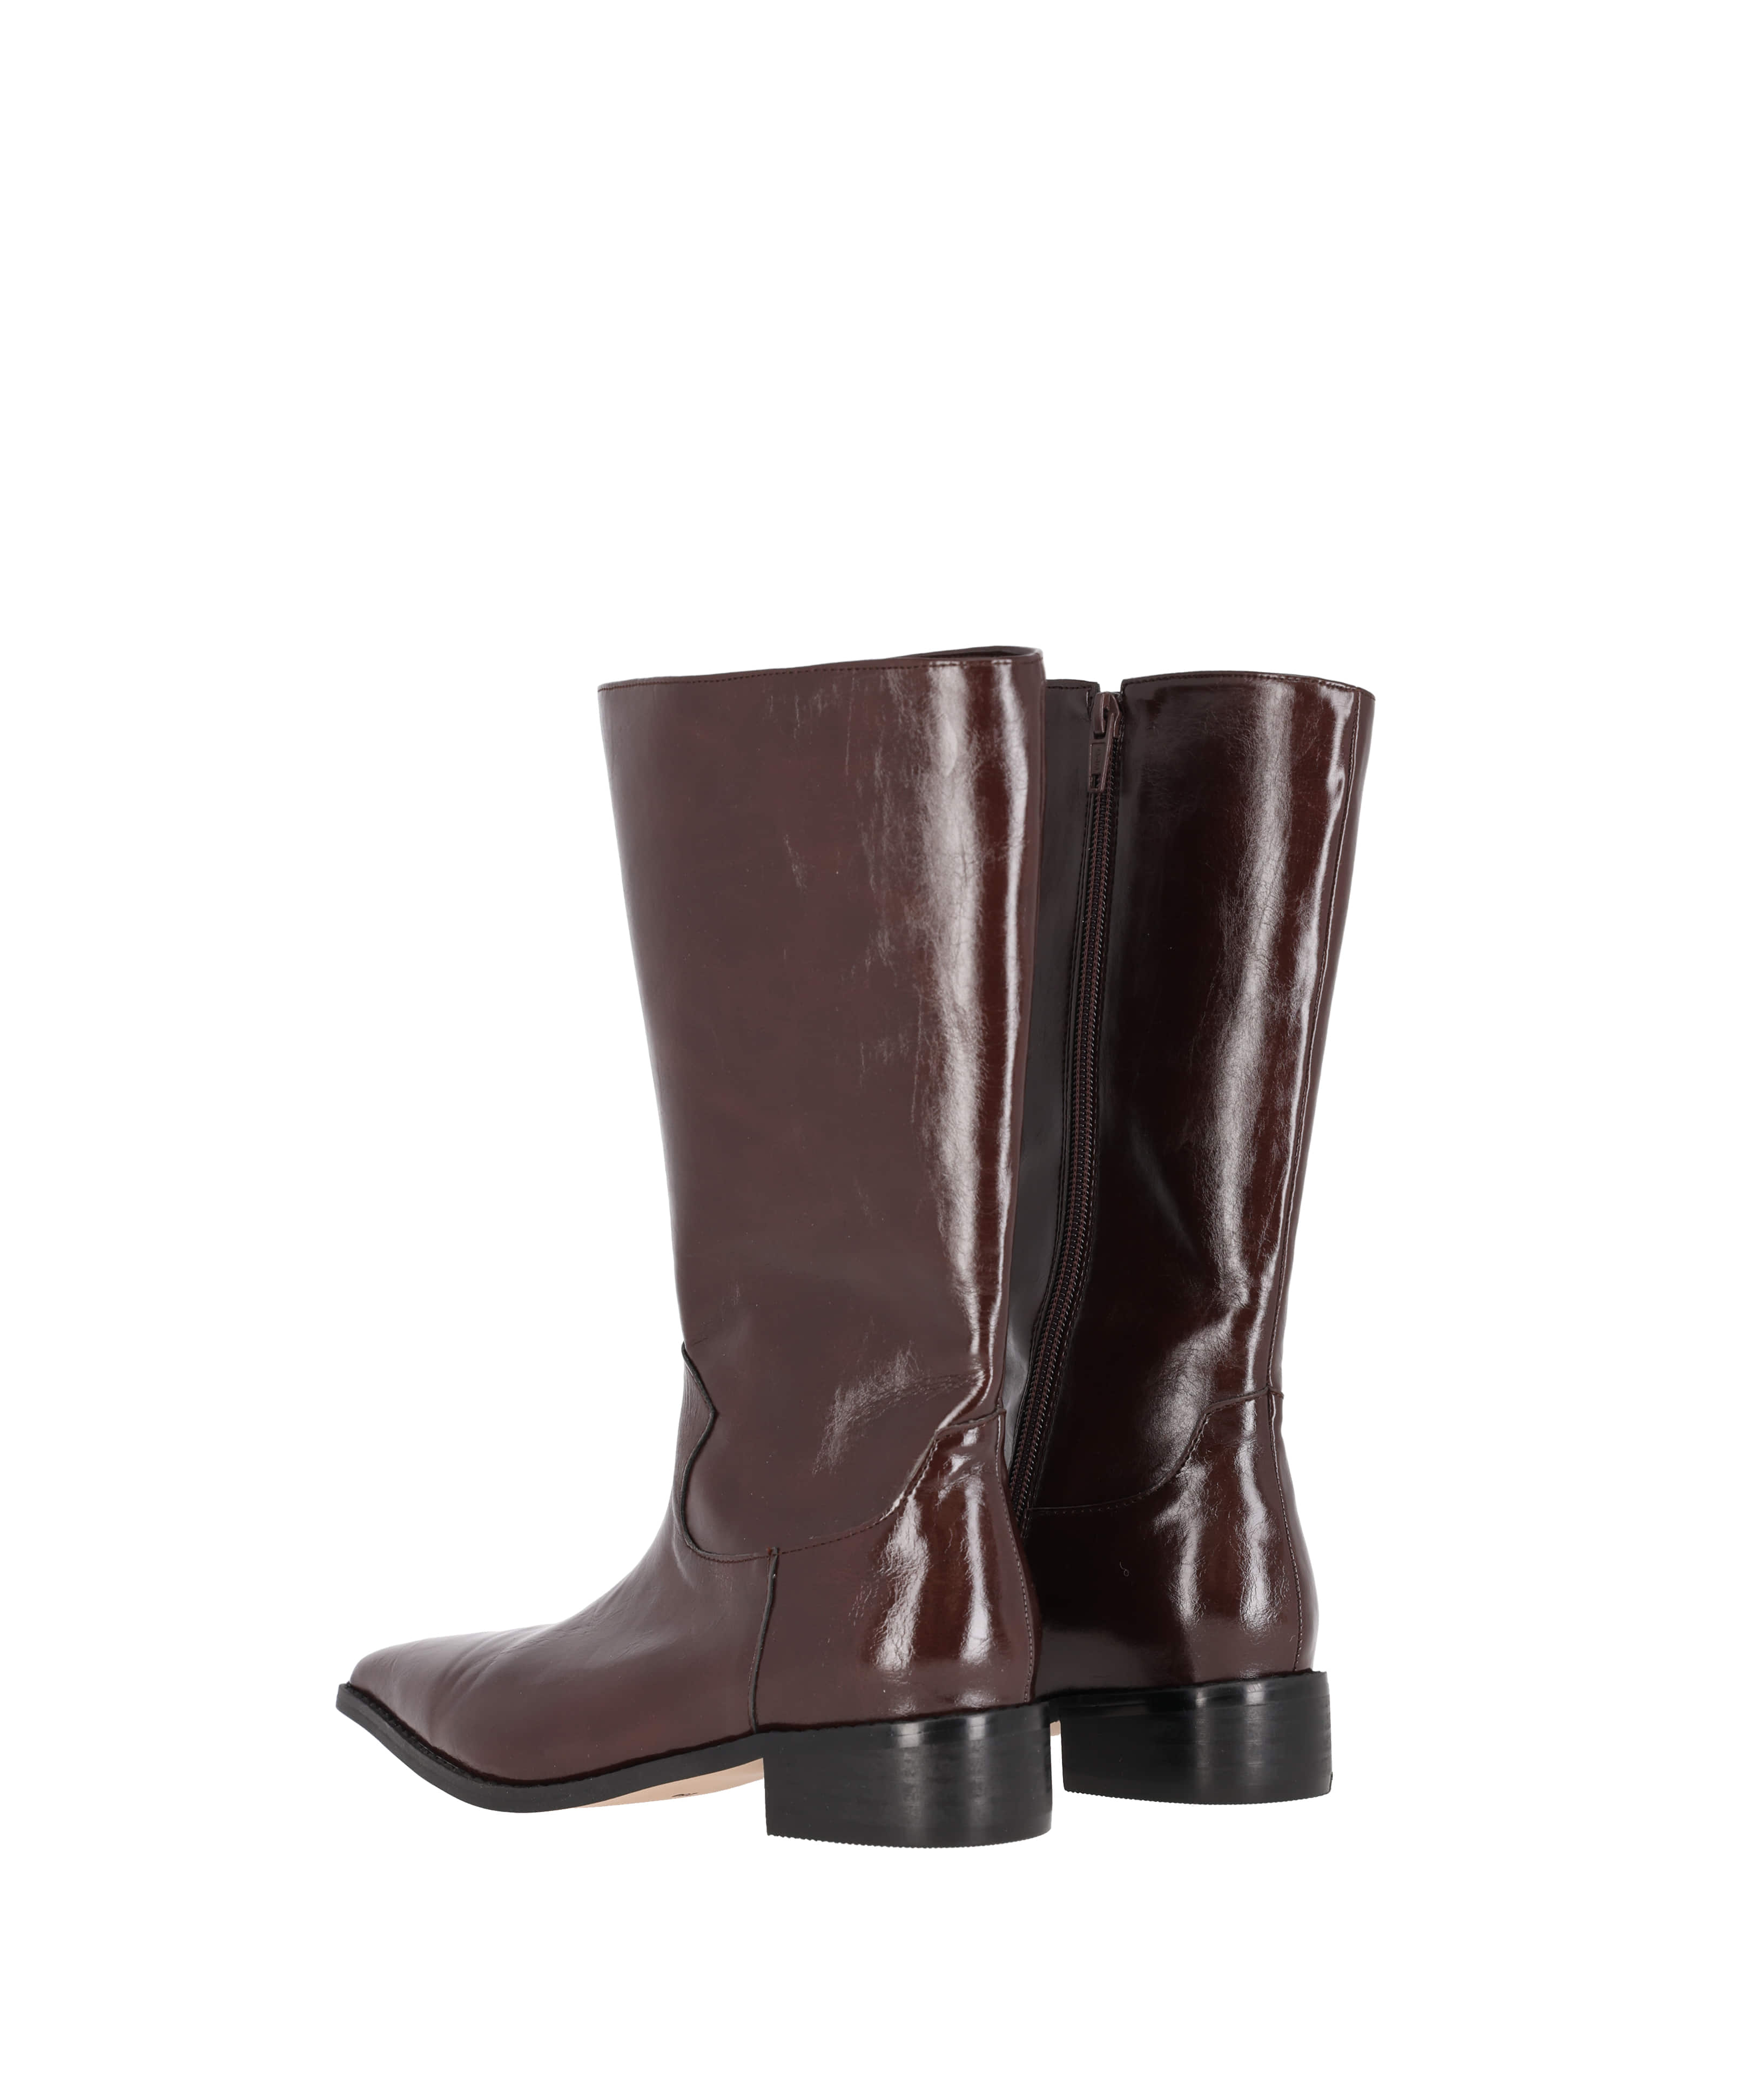 Hazel leather boots